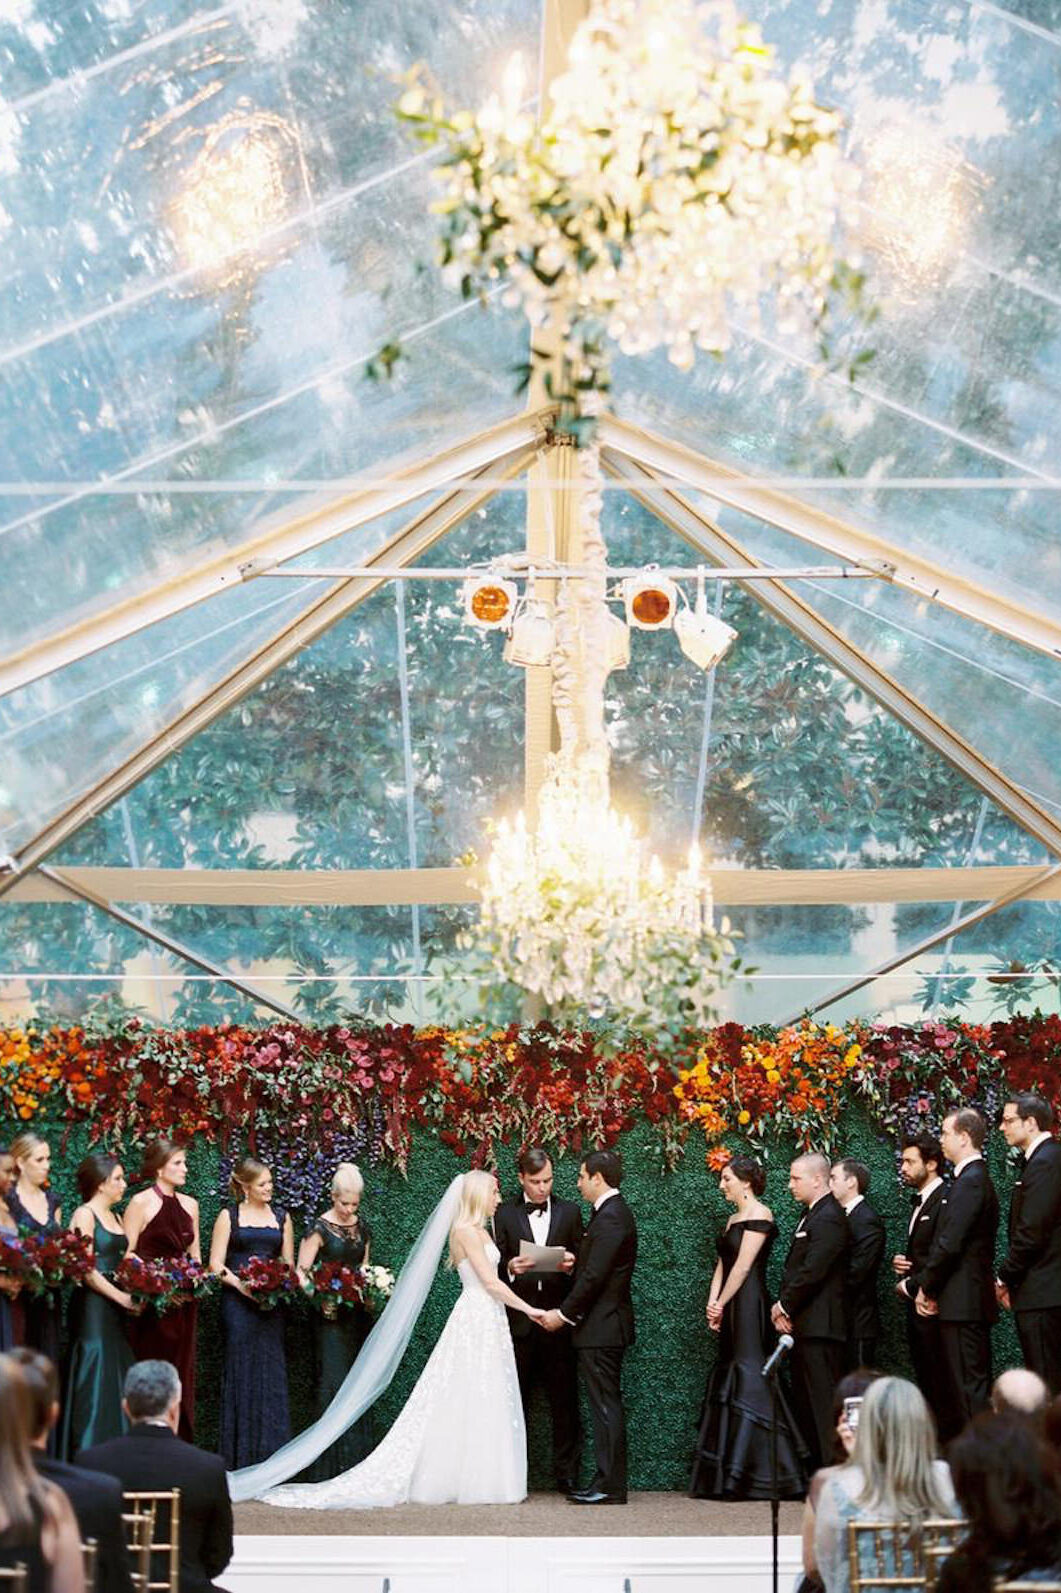 Emerald Green wedding decor - fall wedding colors - Photography: Abby Jiu Photography